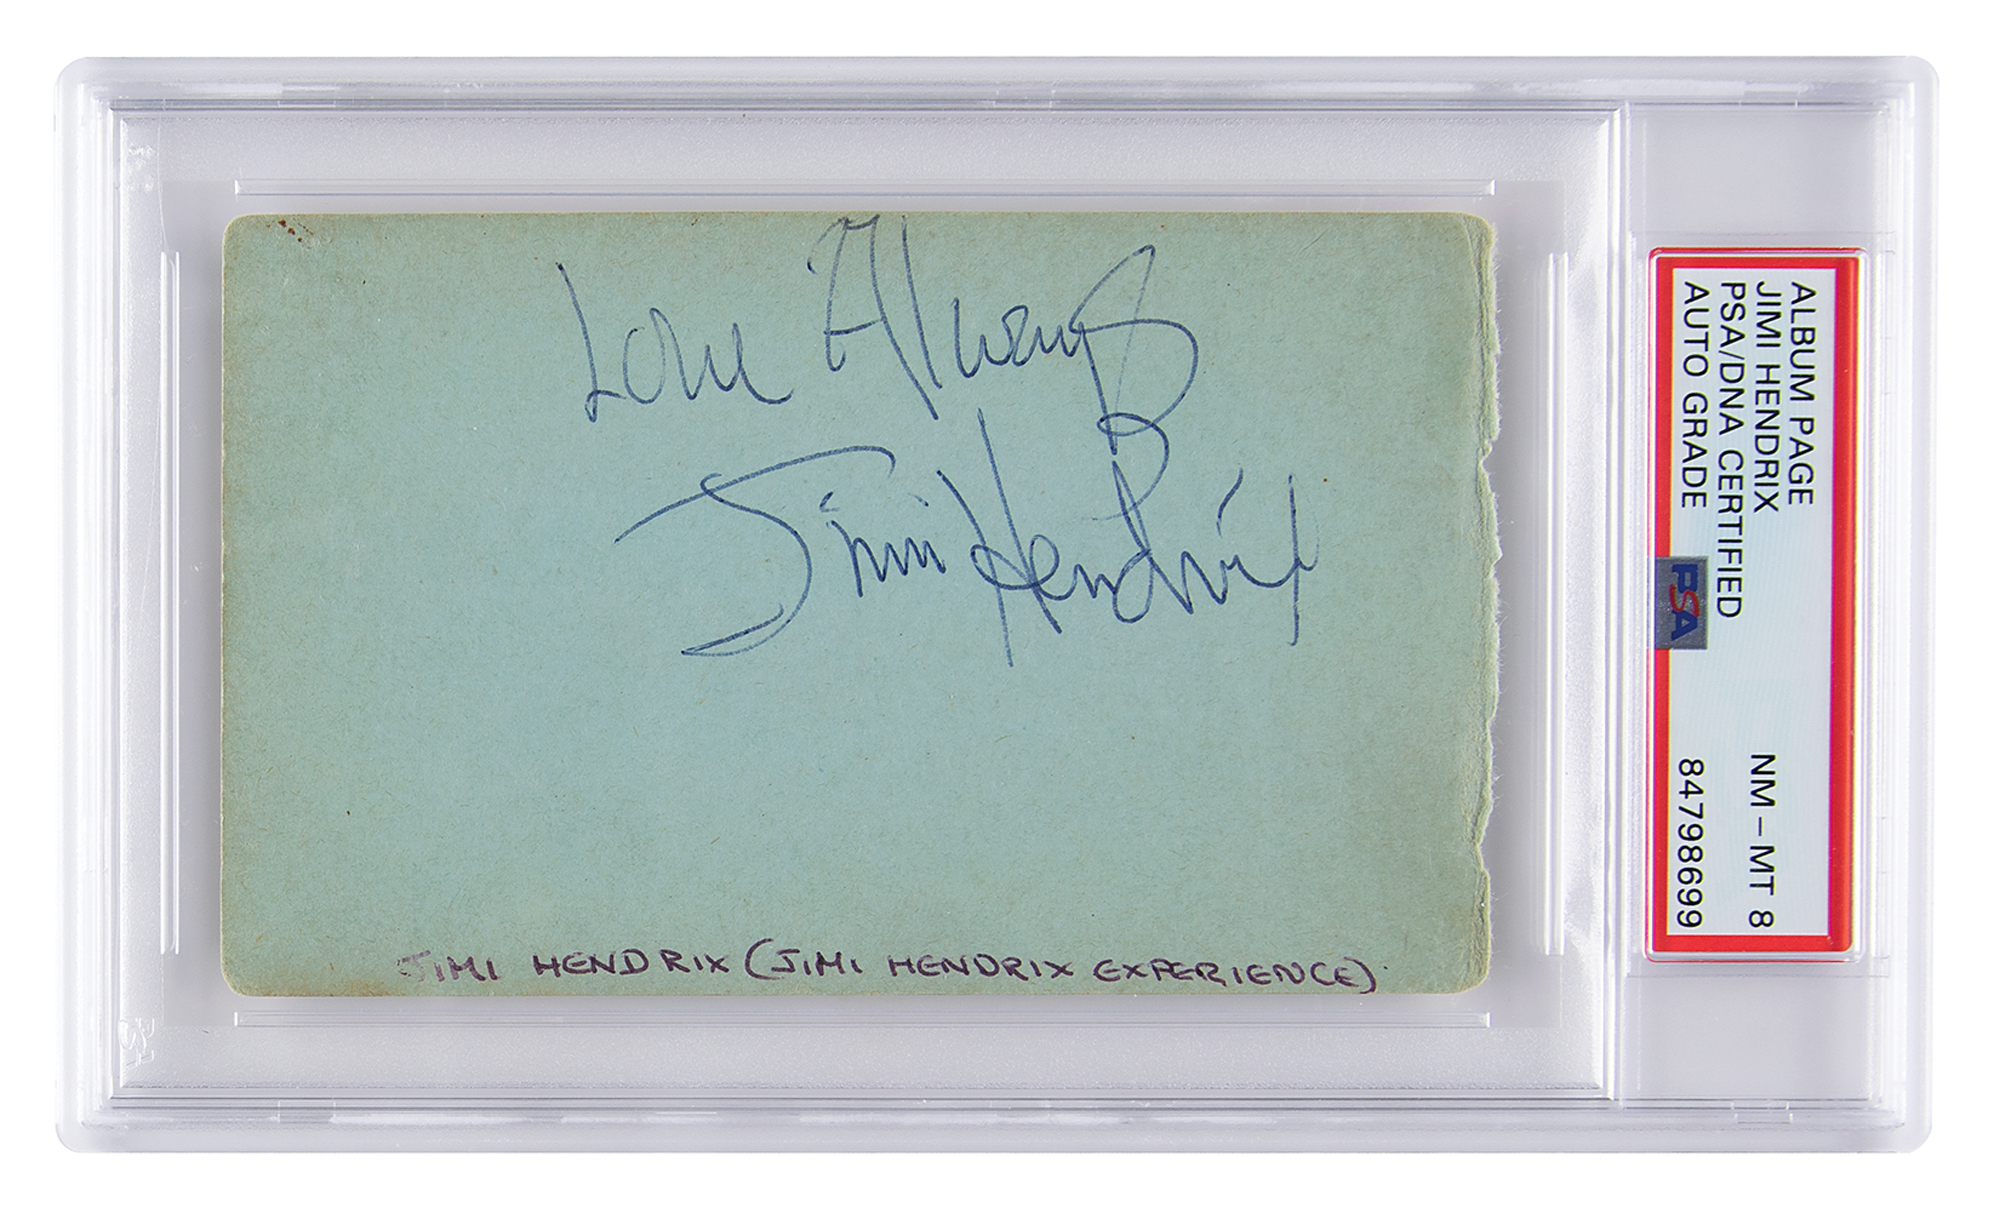 Lot #7264 Jimi Hendrix Signature - PSA NM-MT 8